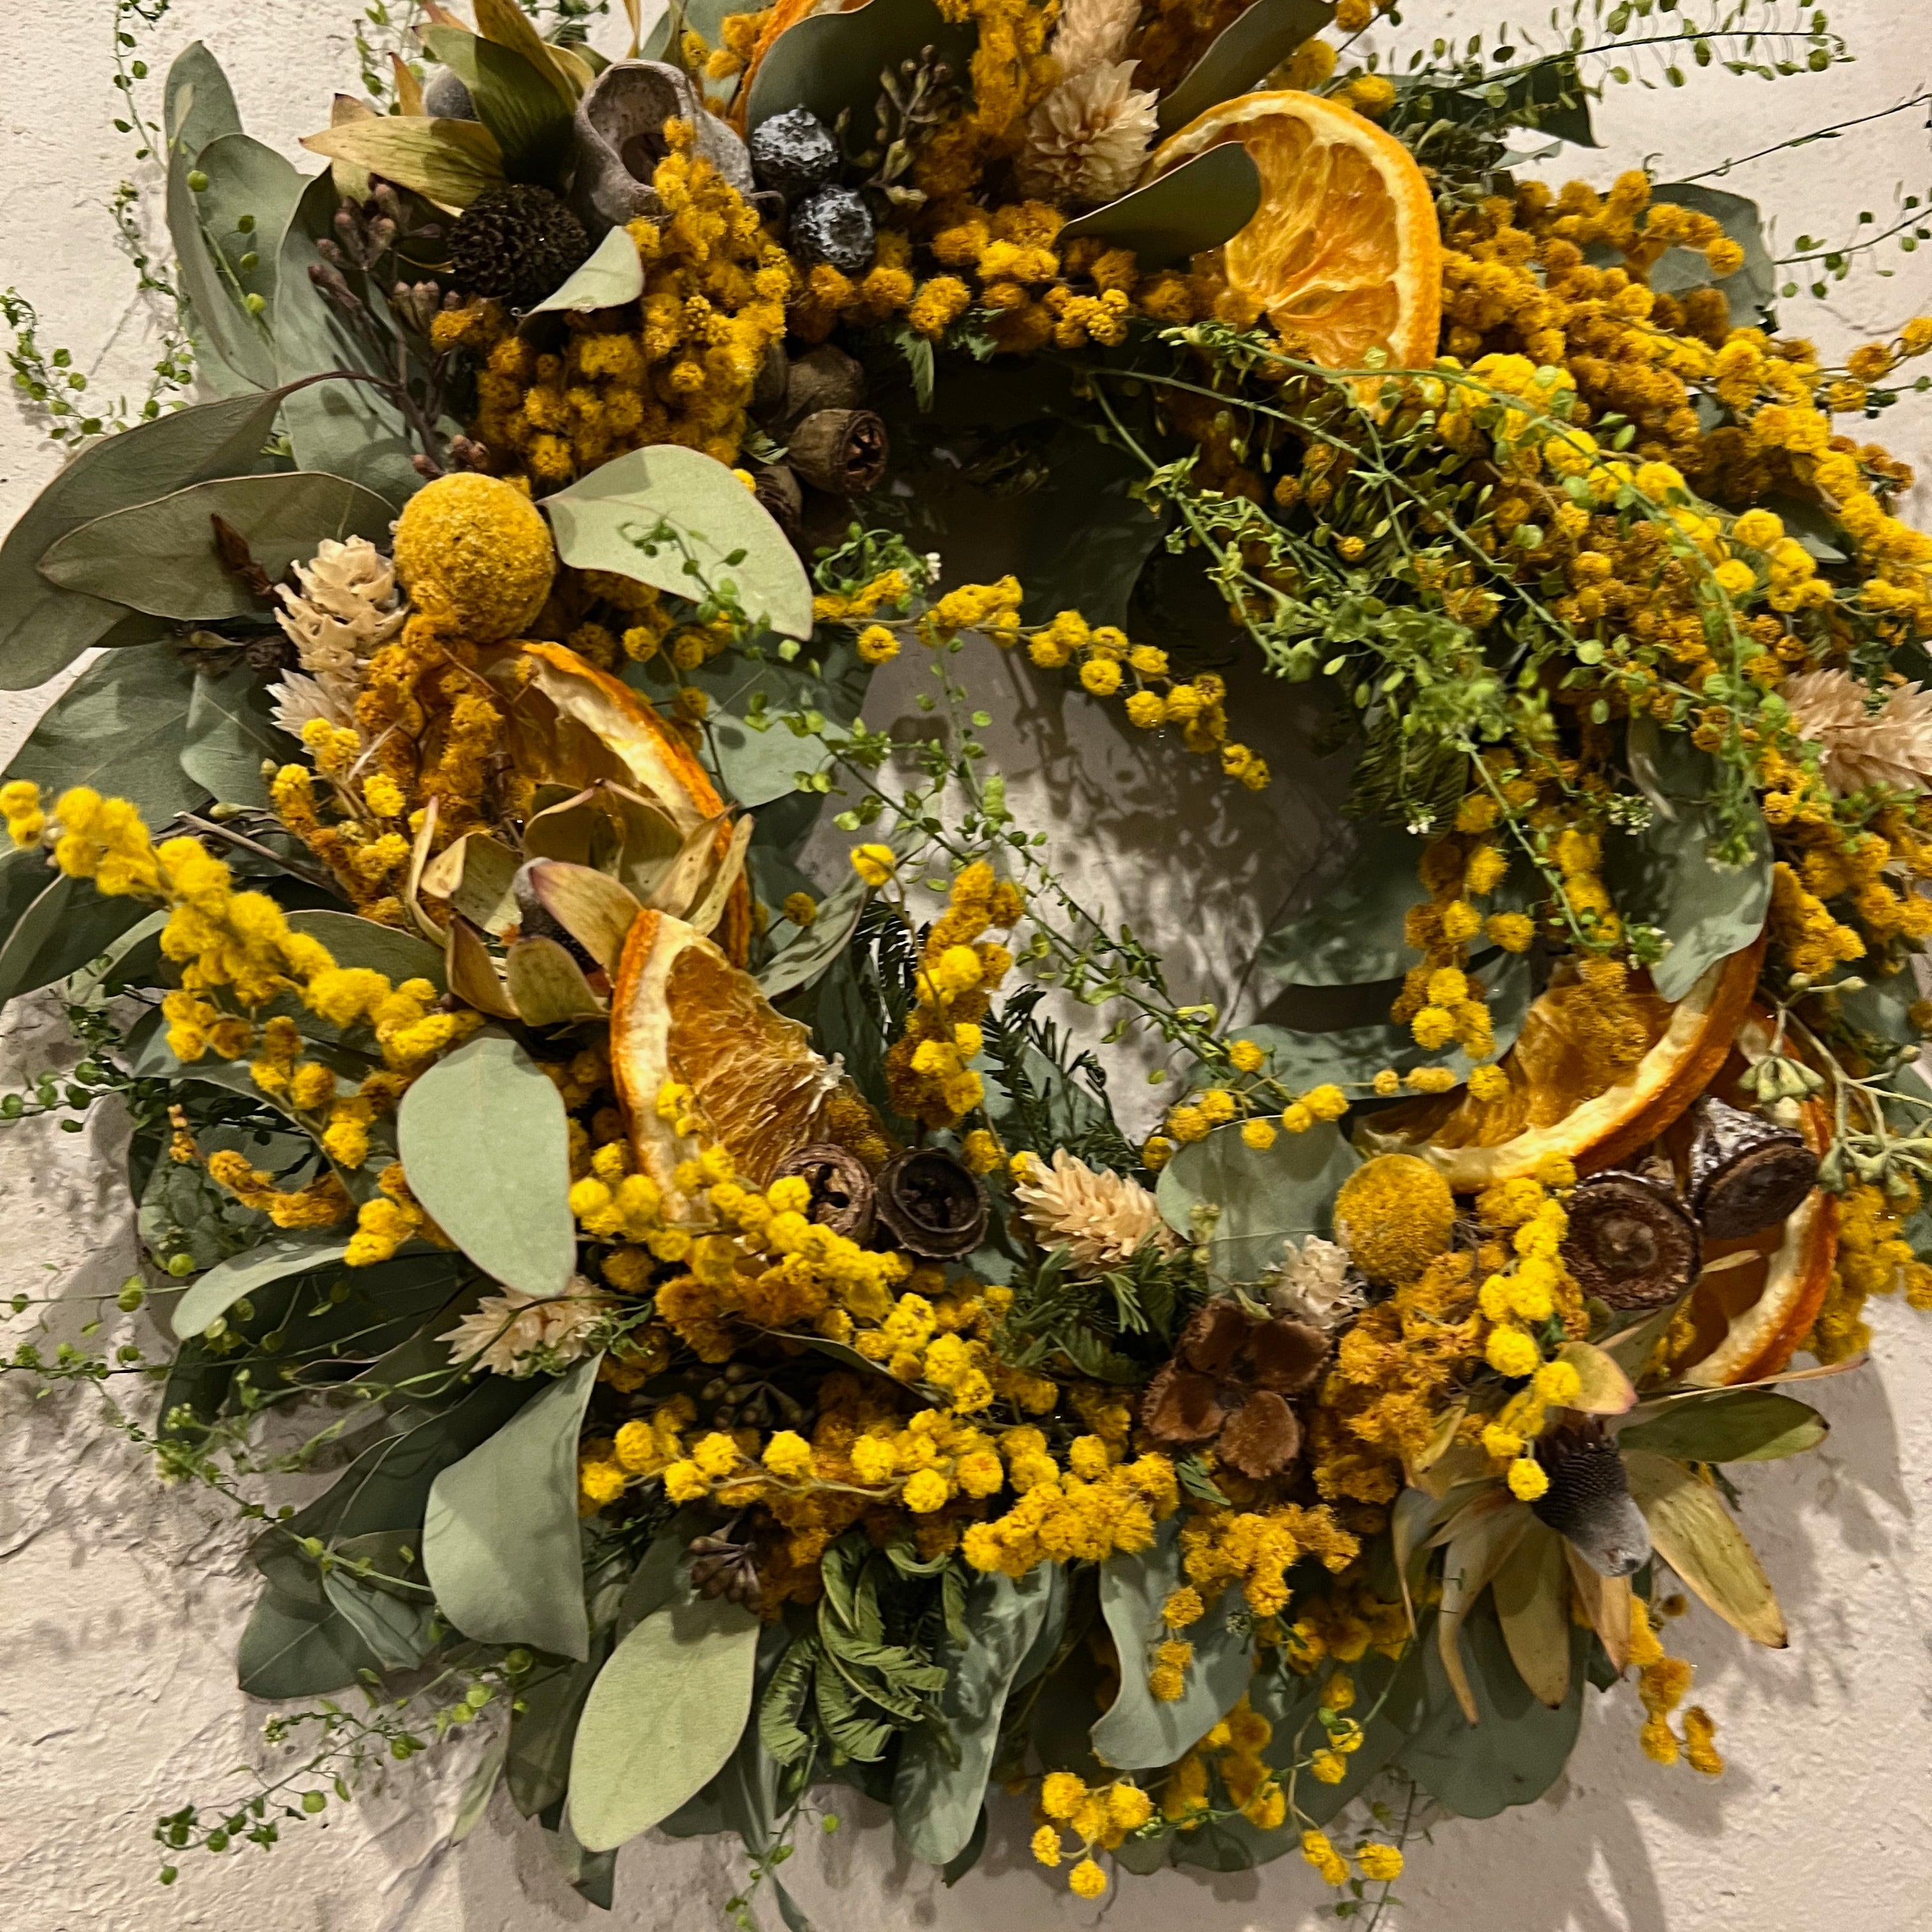 Dried flower mimosa wreath ドライフラワーリース ミモザ×ユーカリ×オレンジスライスの黄色いリース  壁飾りドアリース/2022002 | number12 powered by BASE